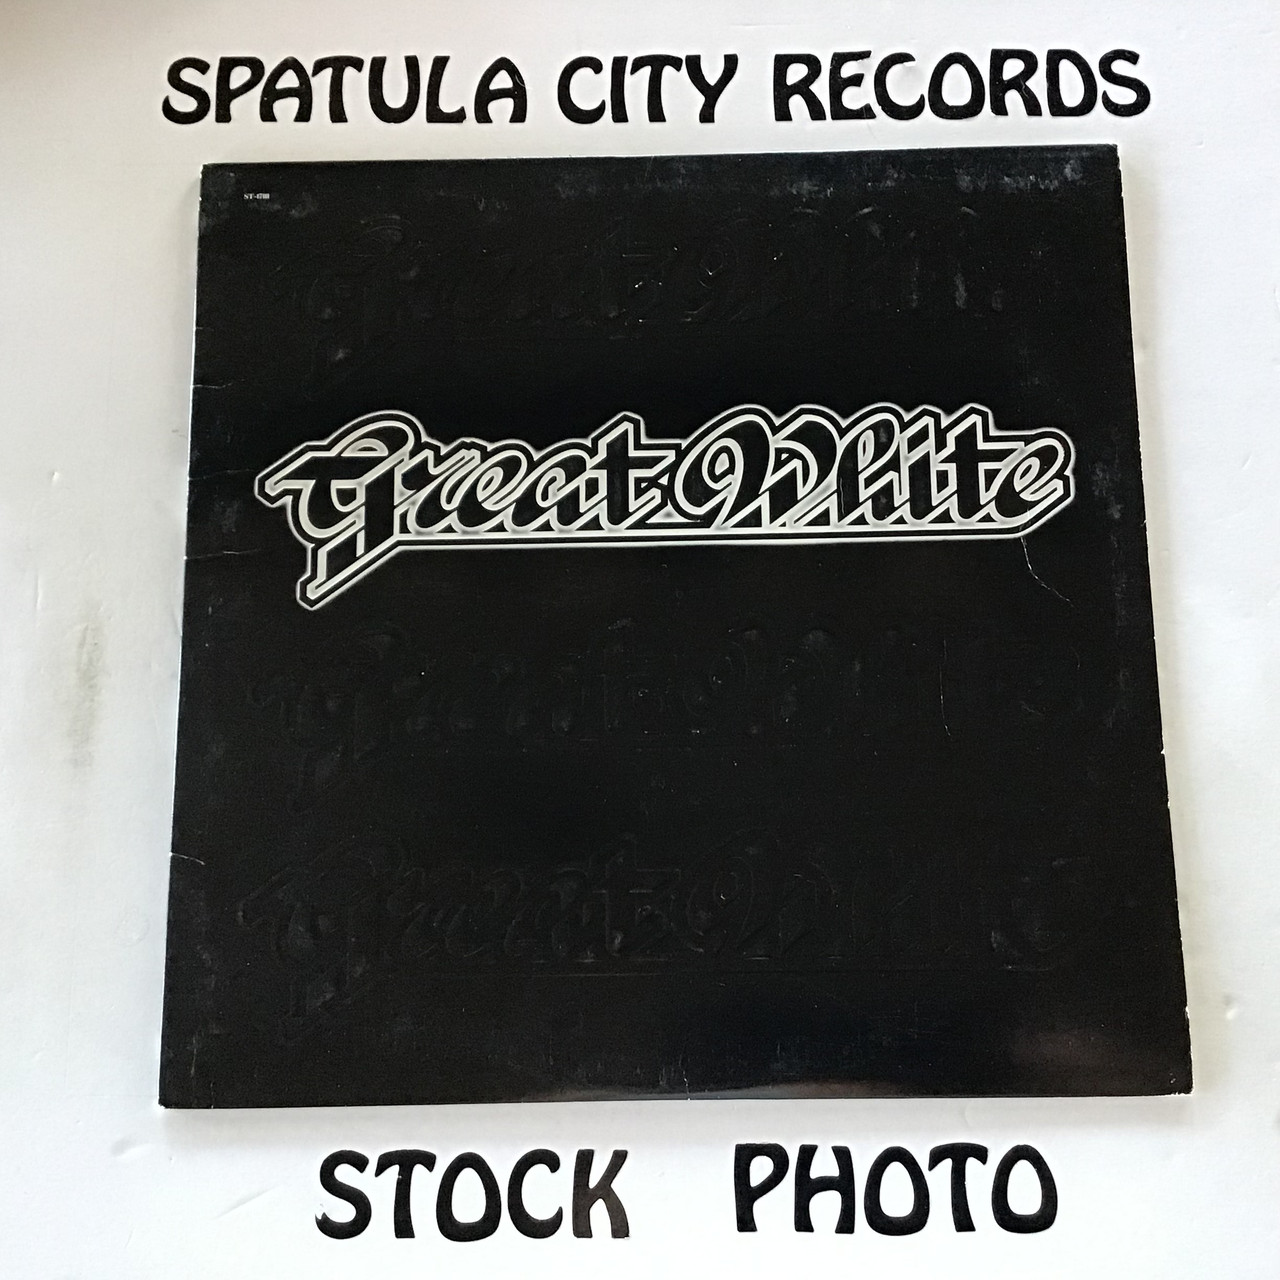 Great White - Great White - vinyl record album LP